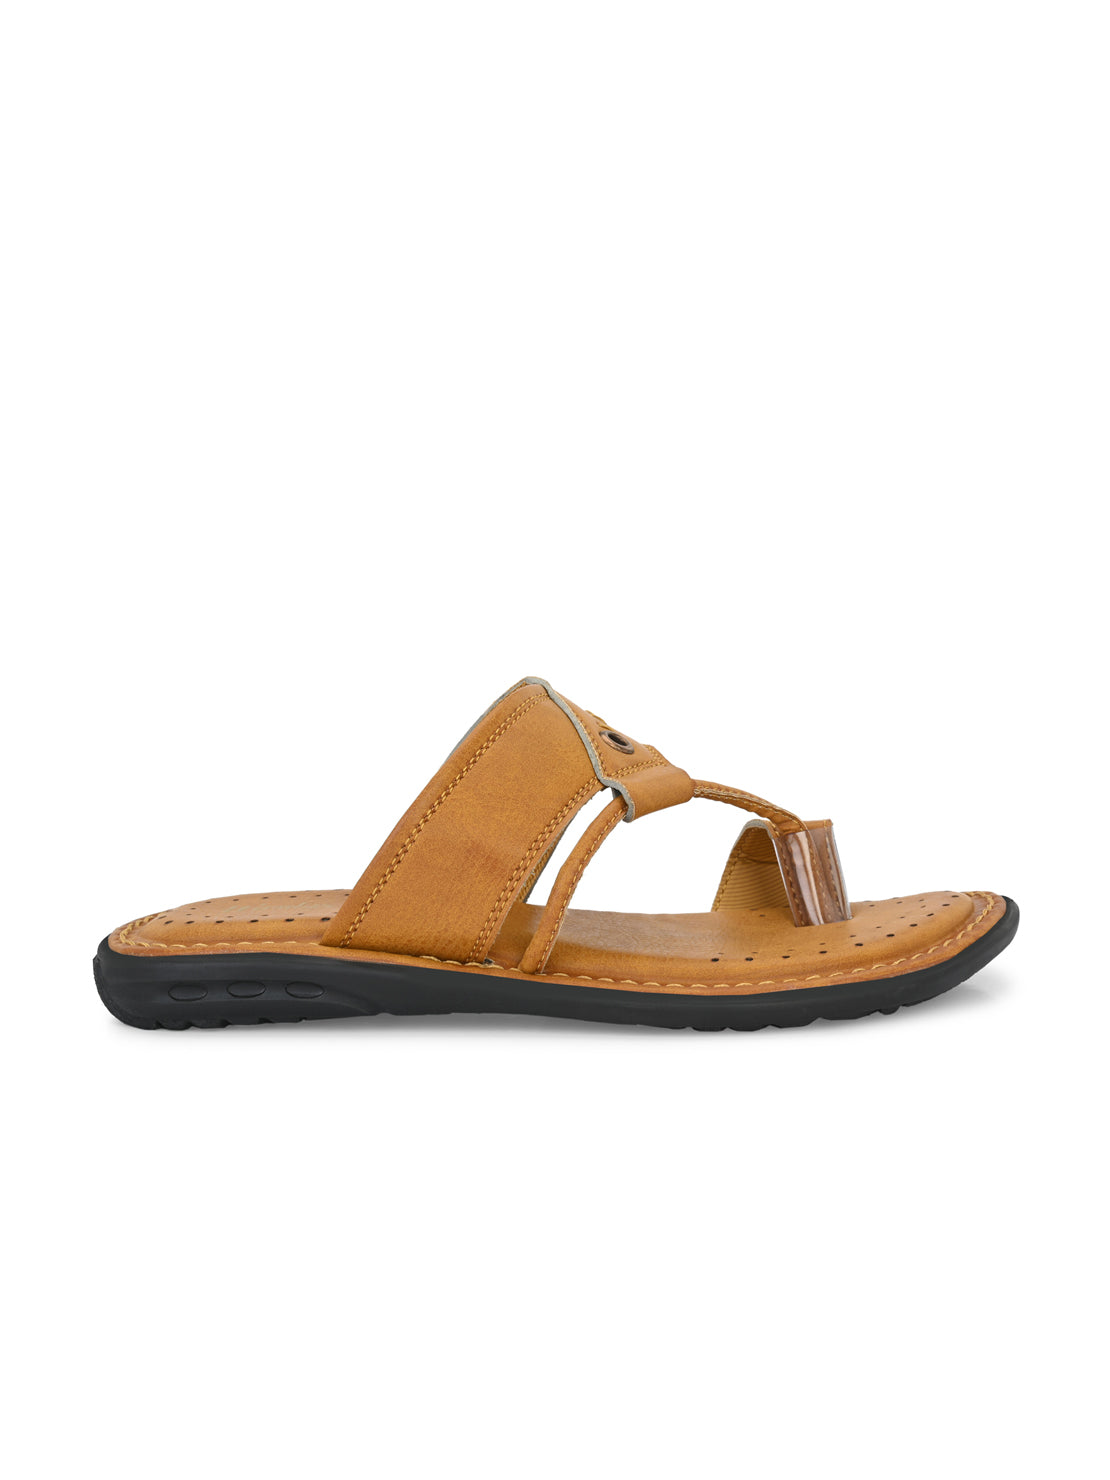 Hirolas® Men's Tan Comfortable Office Slippers (HROMSL14TAN)